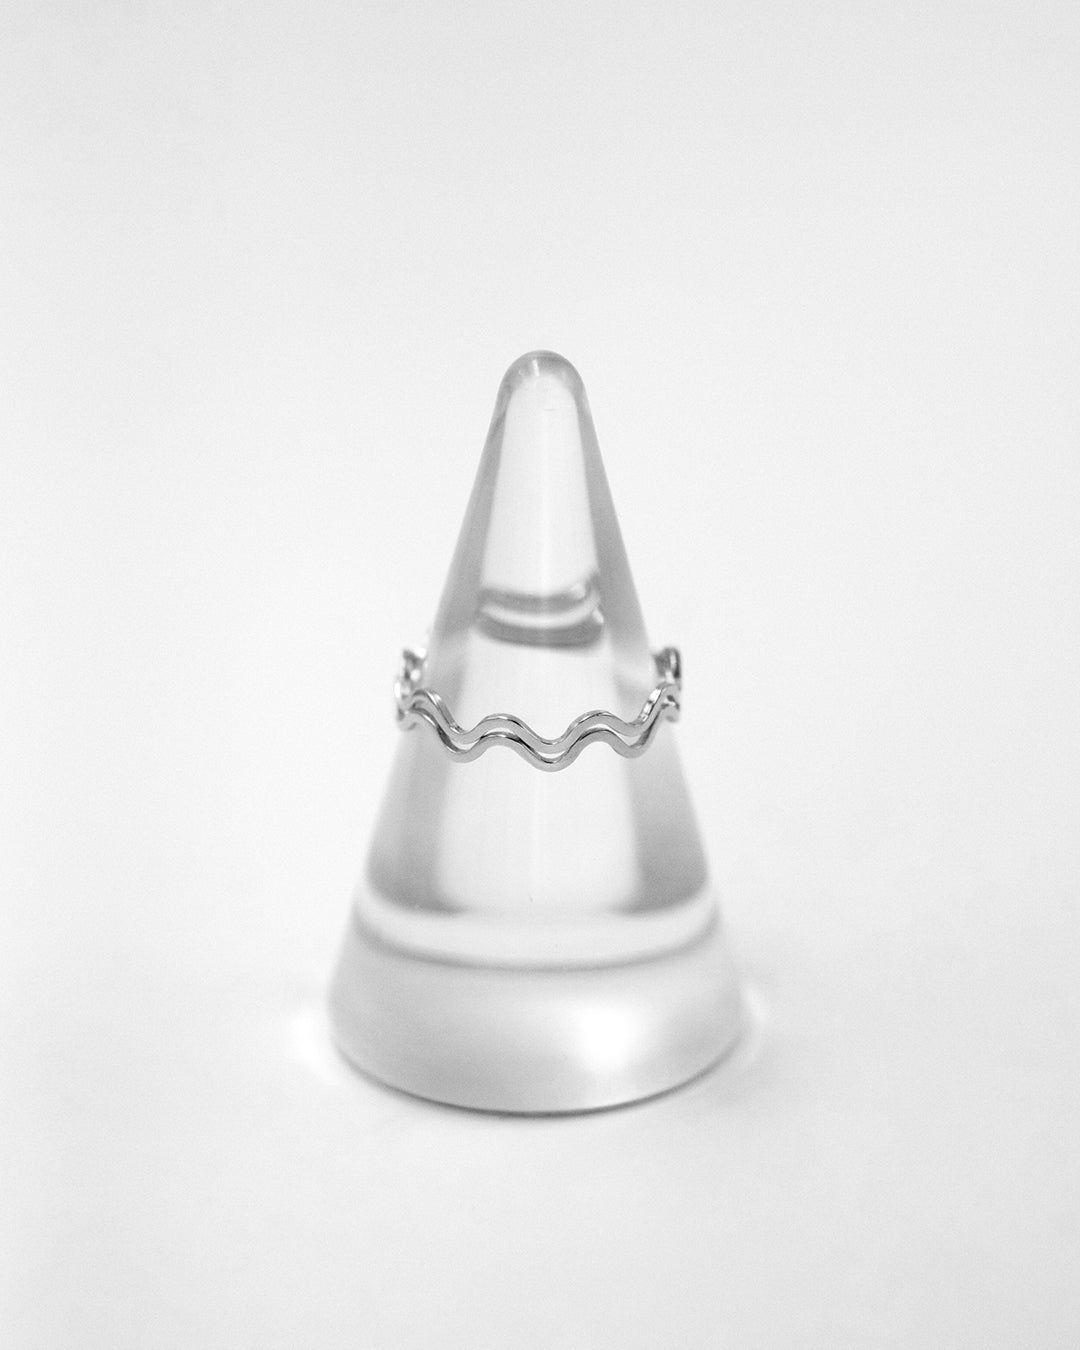 IDAMARI Billow Ring in Sterling Silver available at Lahn.shop